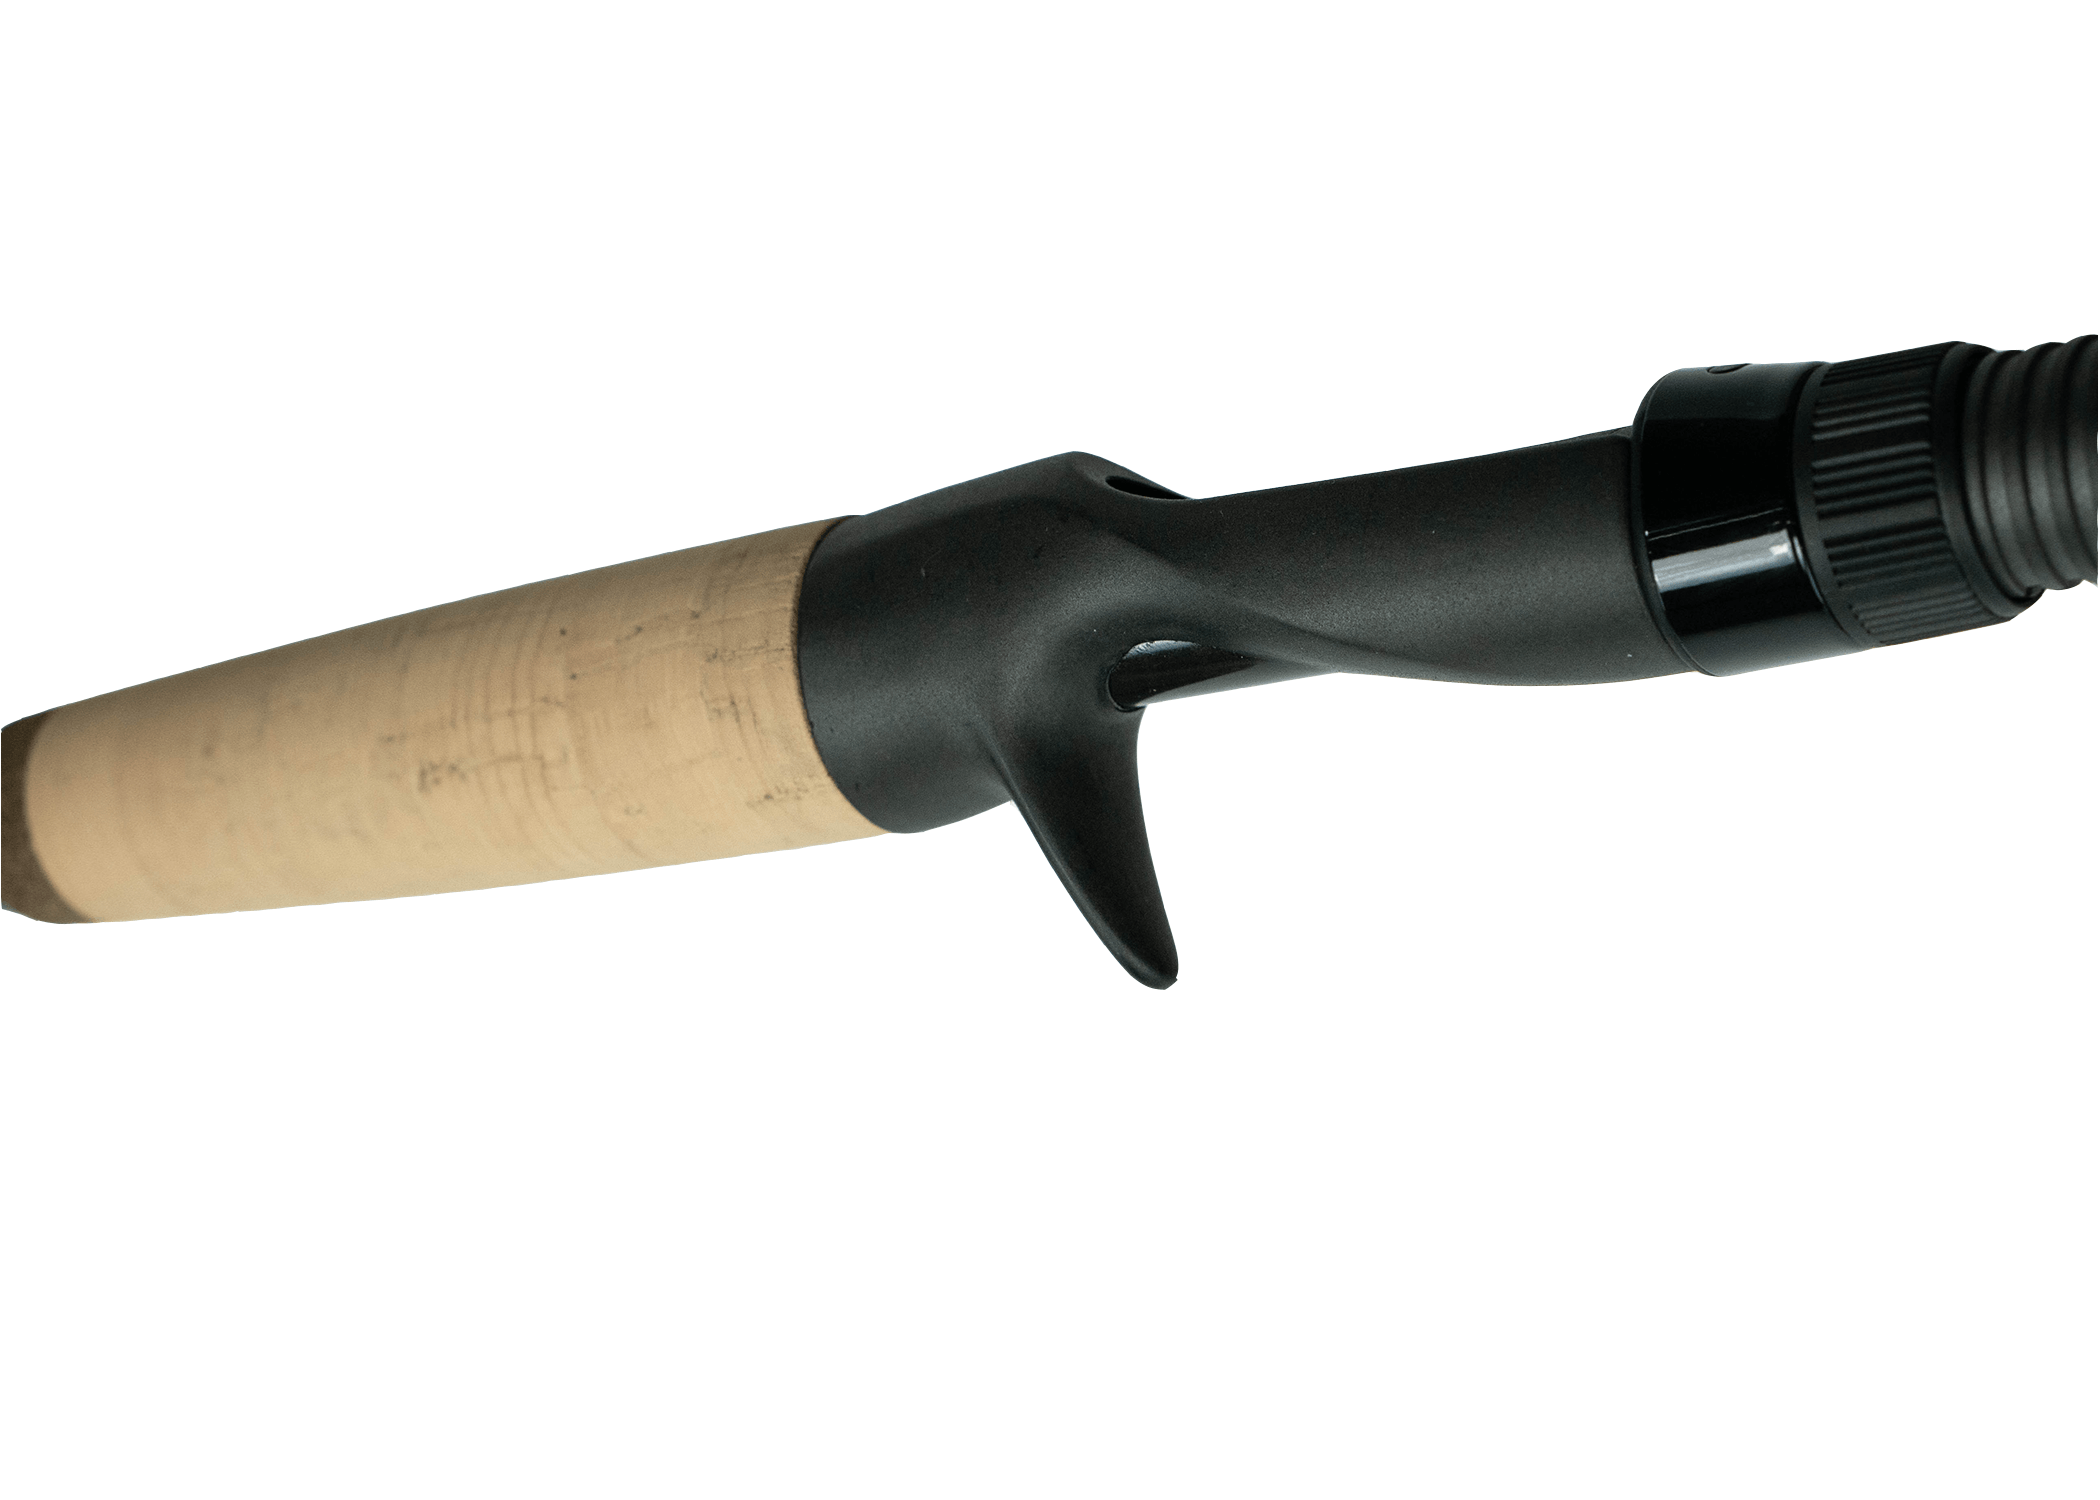 JAK Series 7' 3" Baitcaster - Hammer Rods